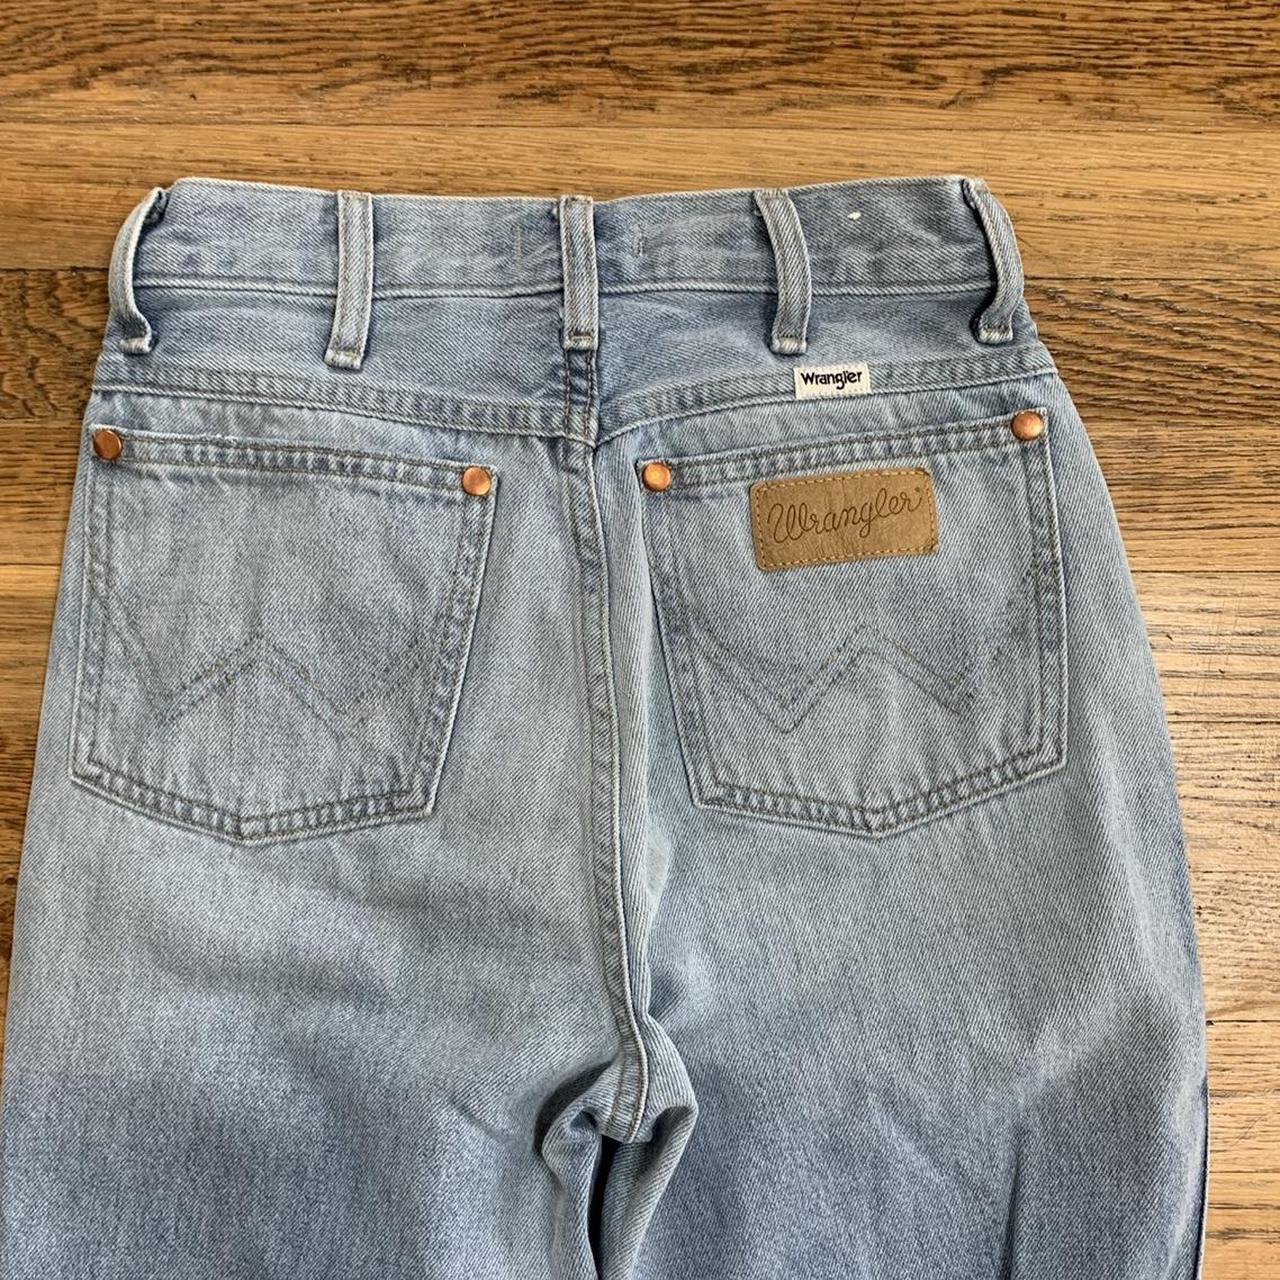 Straight leg light wash wrangler jeans with... - Depop